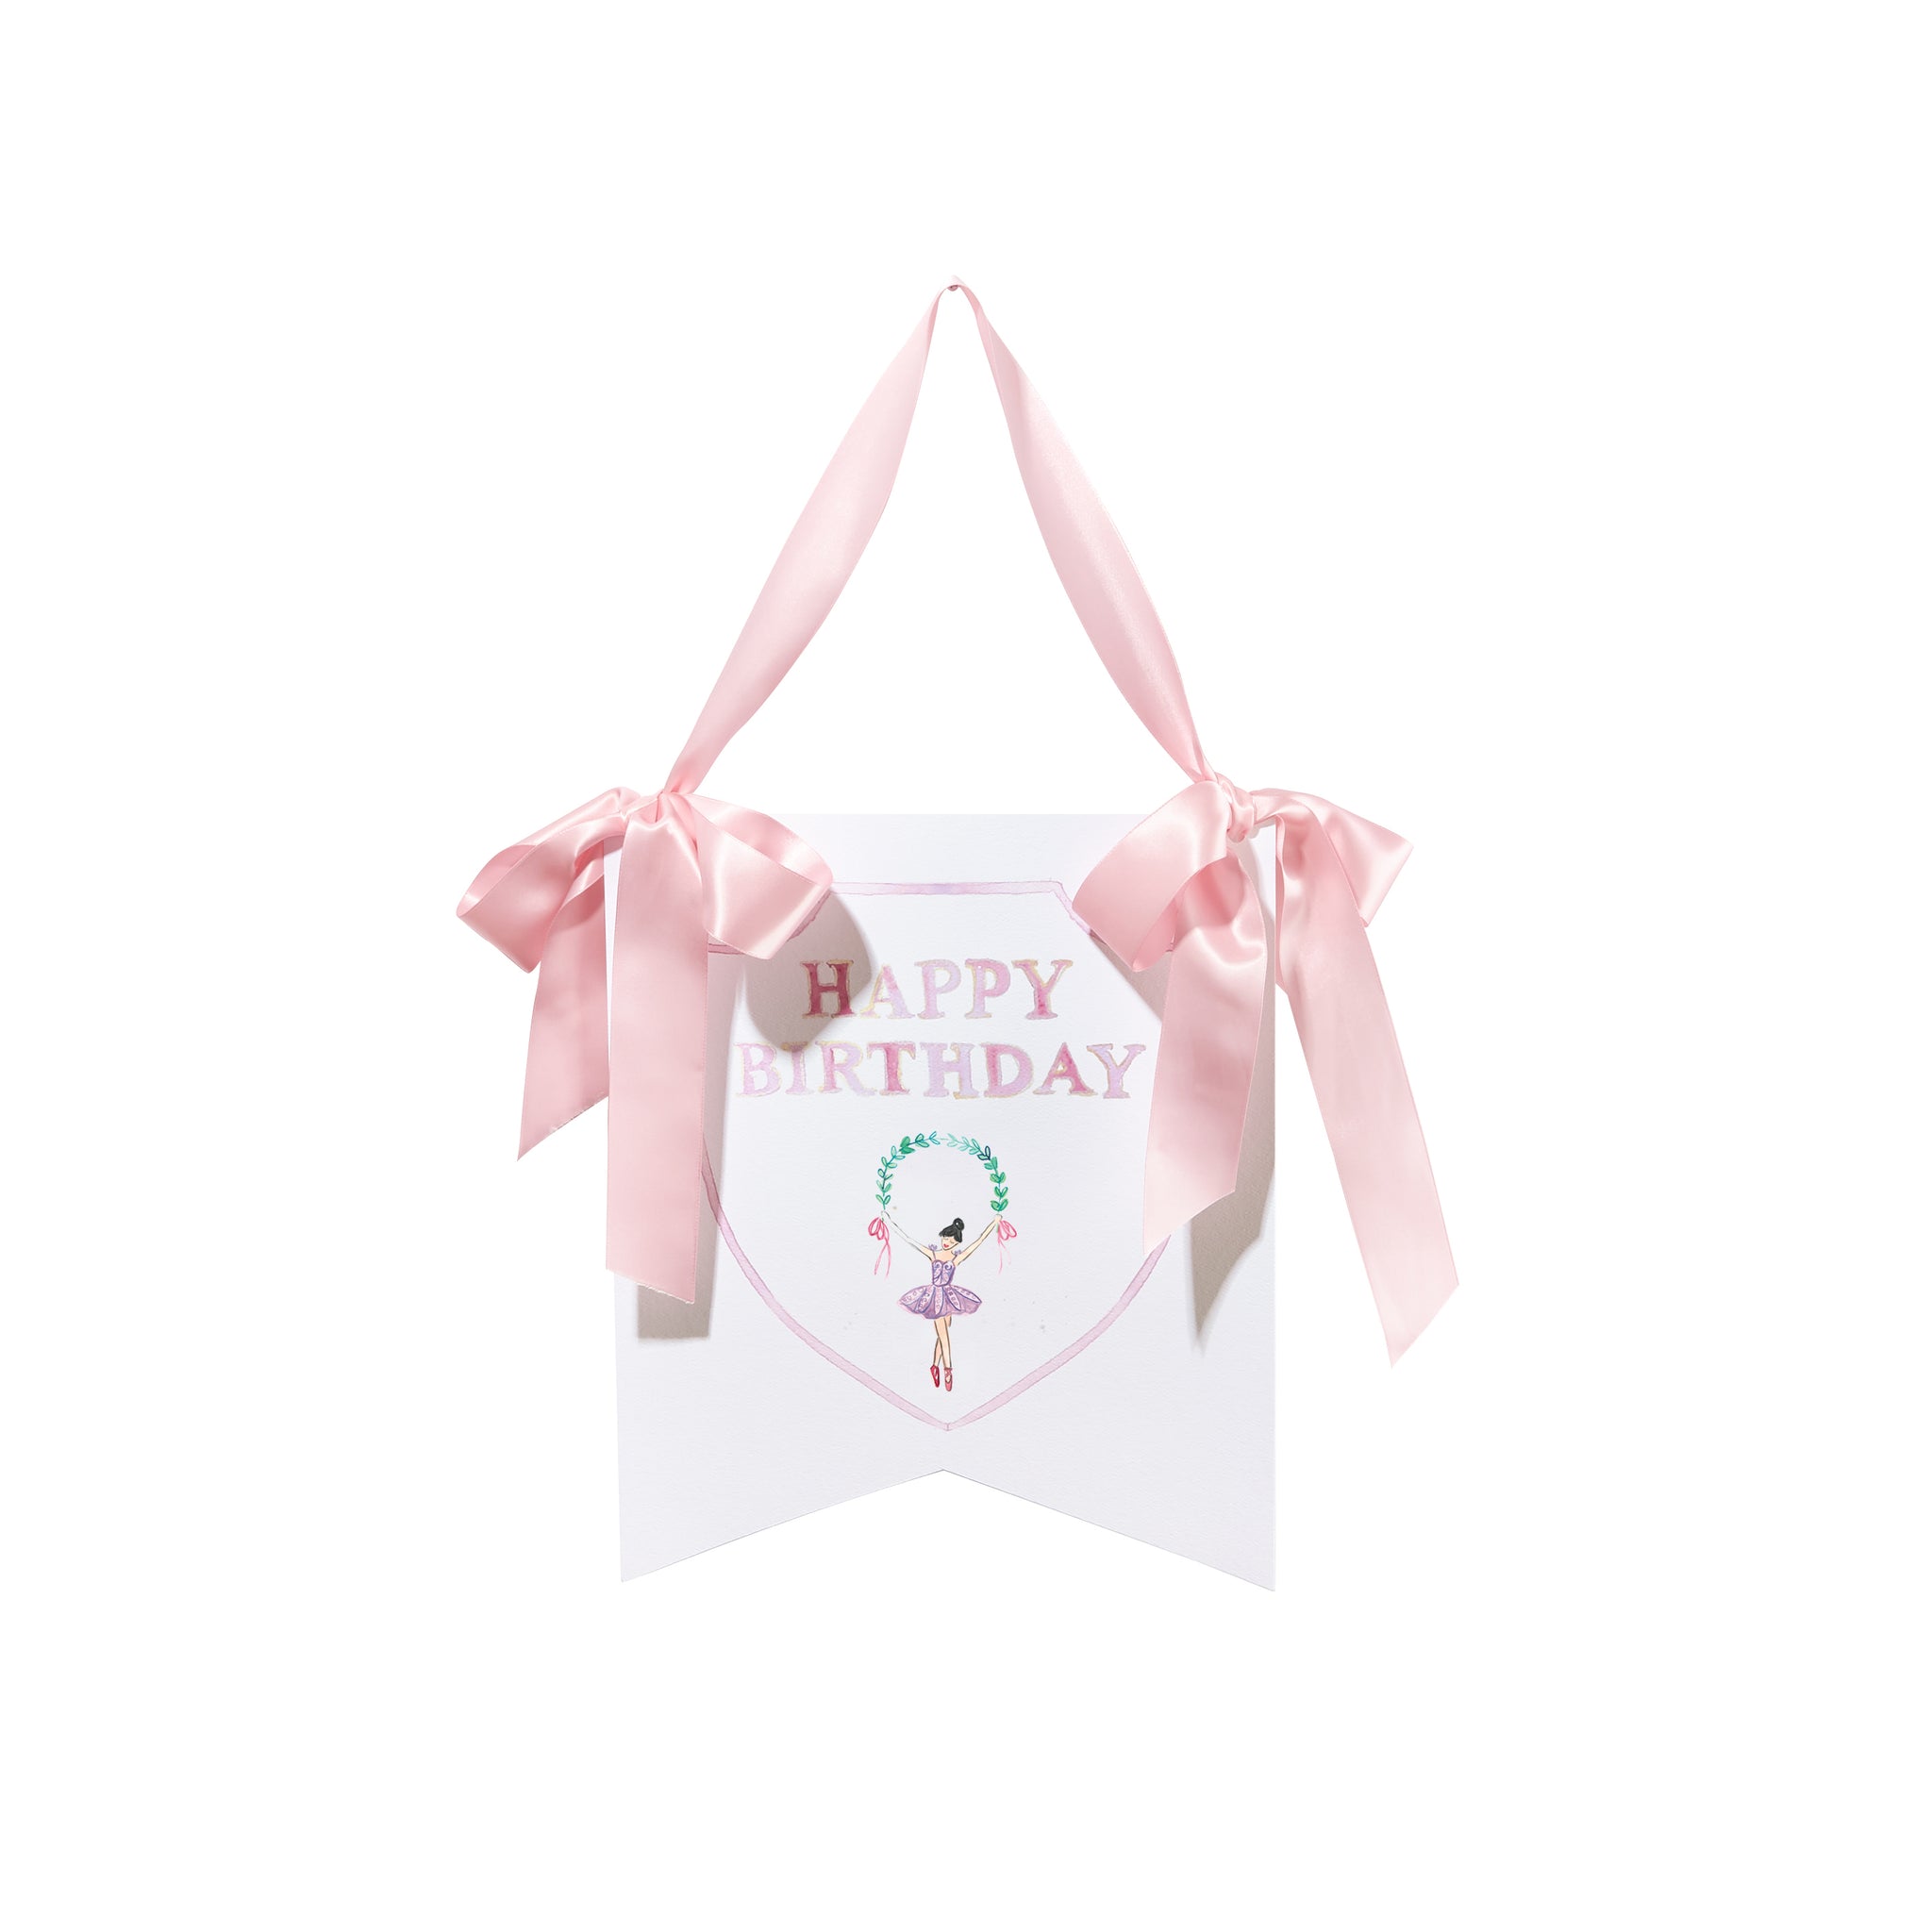 "Happy Birthday" Ballerina Hanger - Brunette